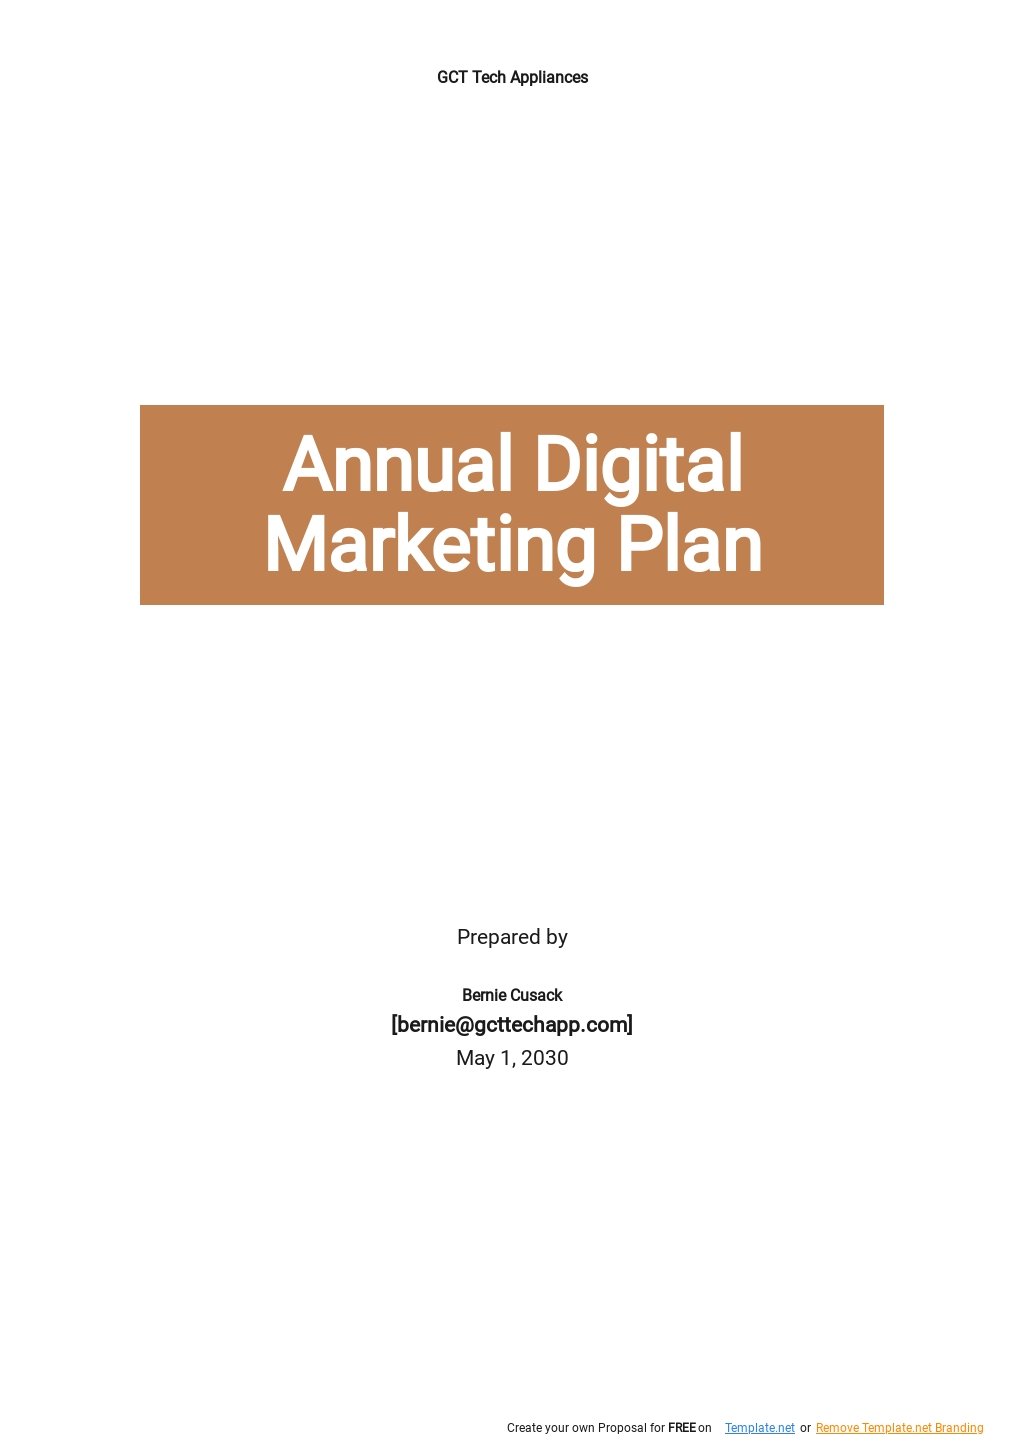 Annual Digital Marketing Plan Template